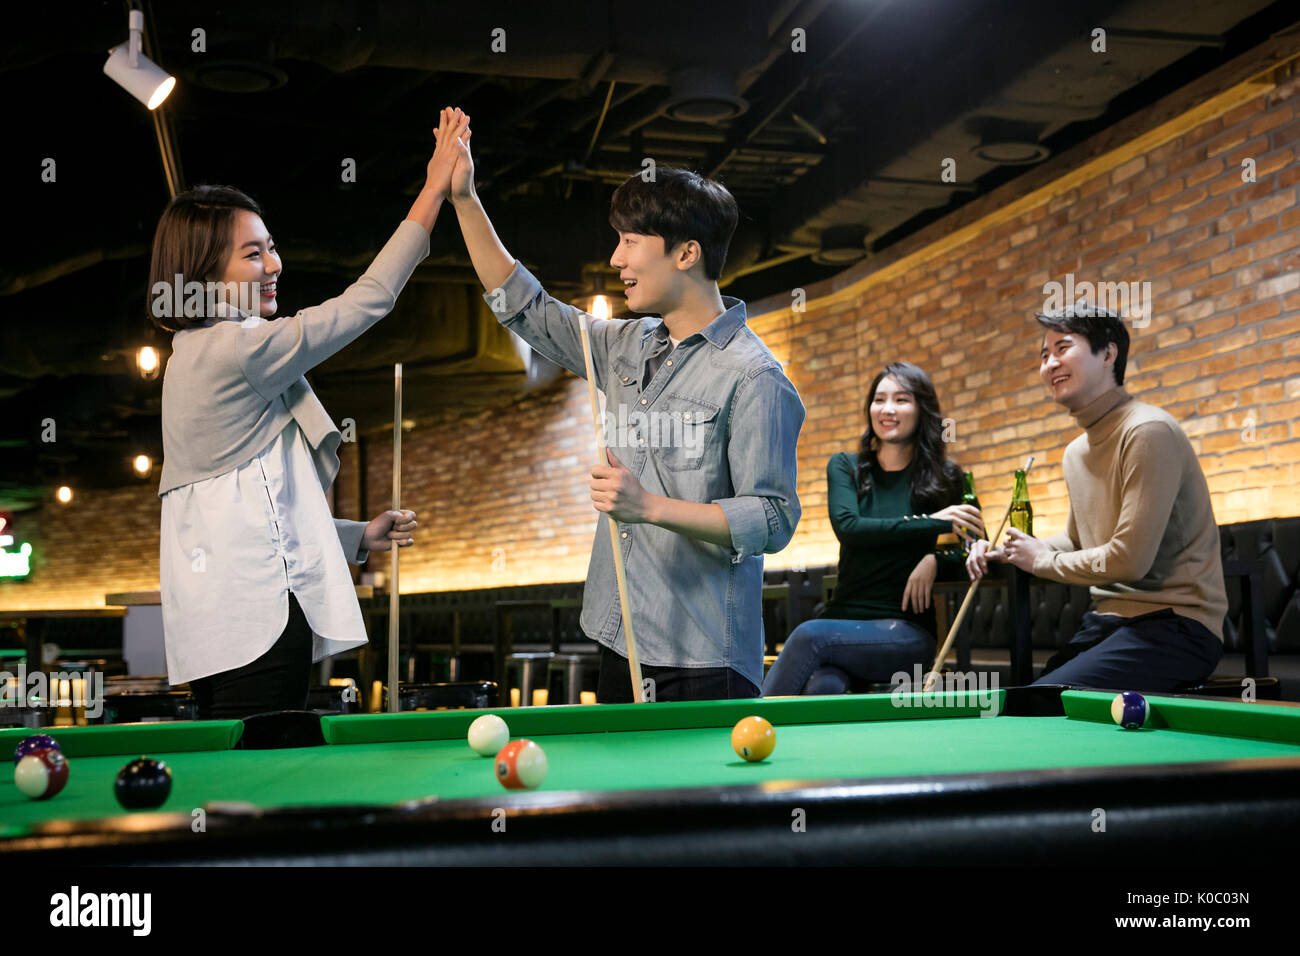 Smiling coworkers enjoying billiard game Stock Photo